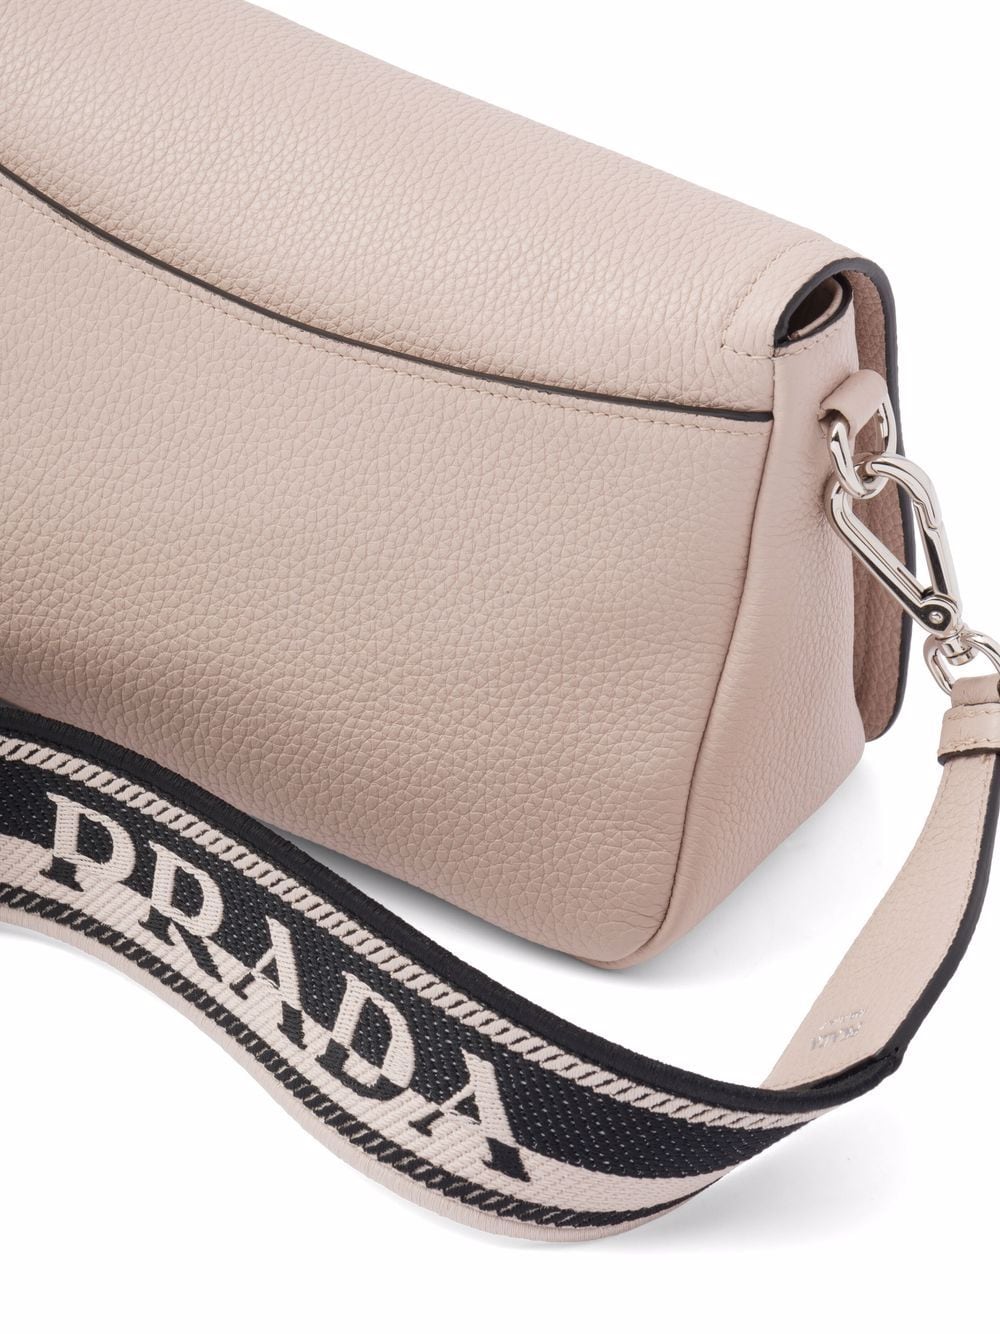 Prada Brown Leather Small Flap Bag